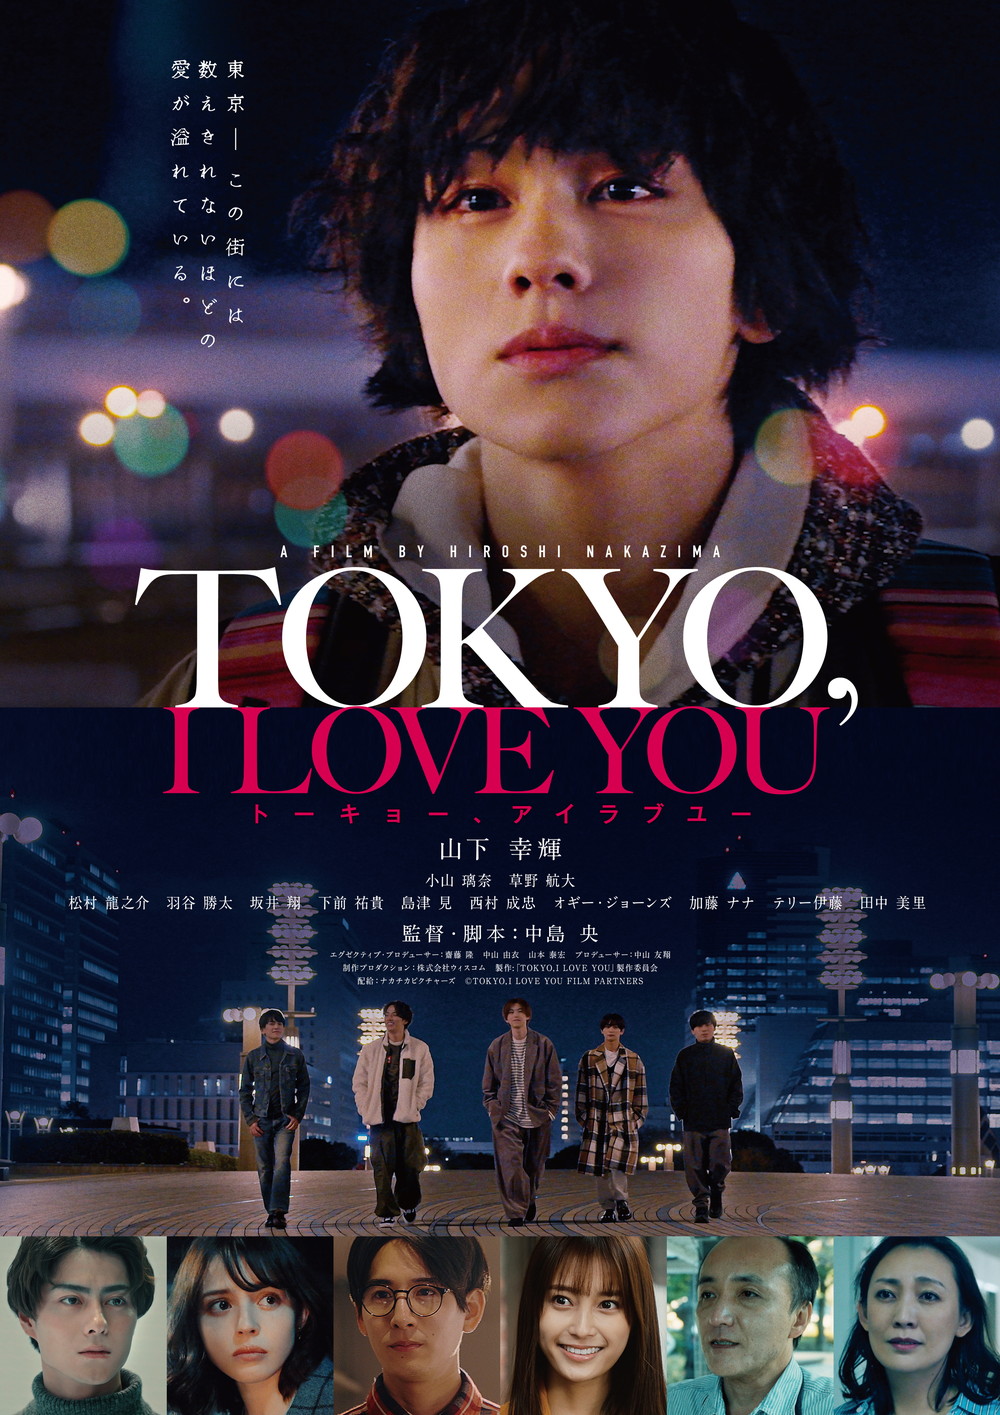 「TOKYO,I LOVE YOU」